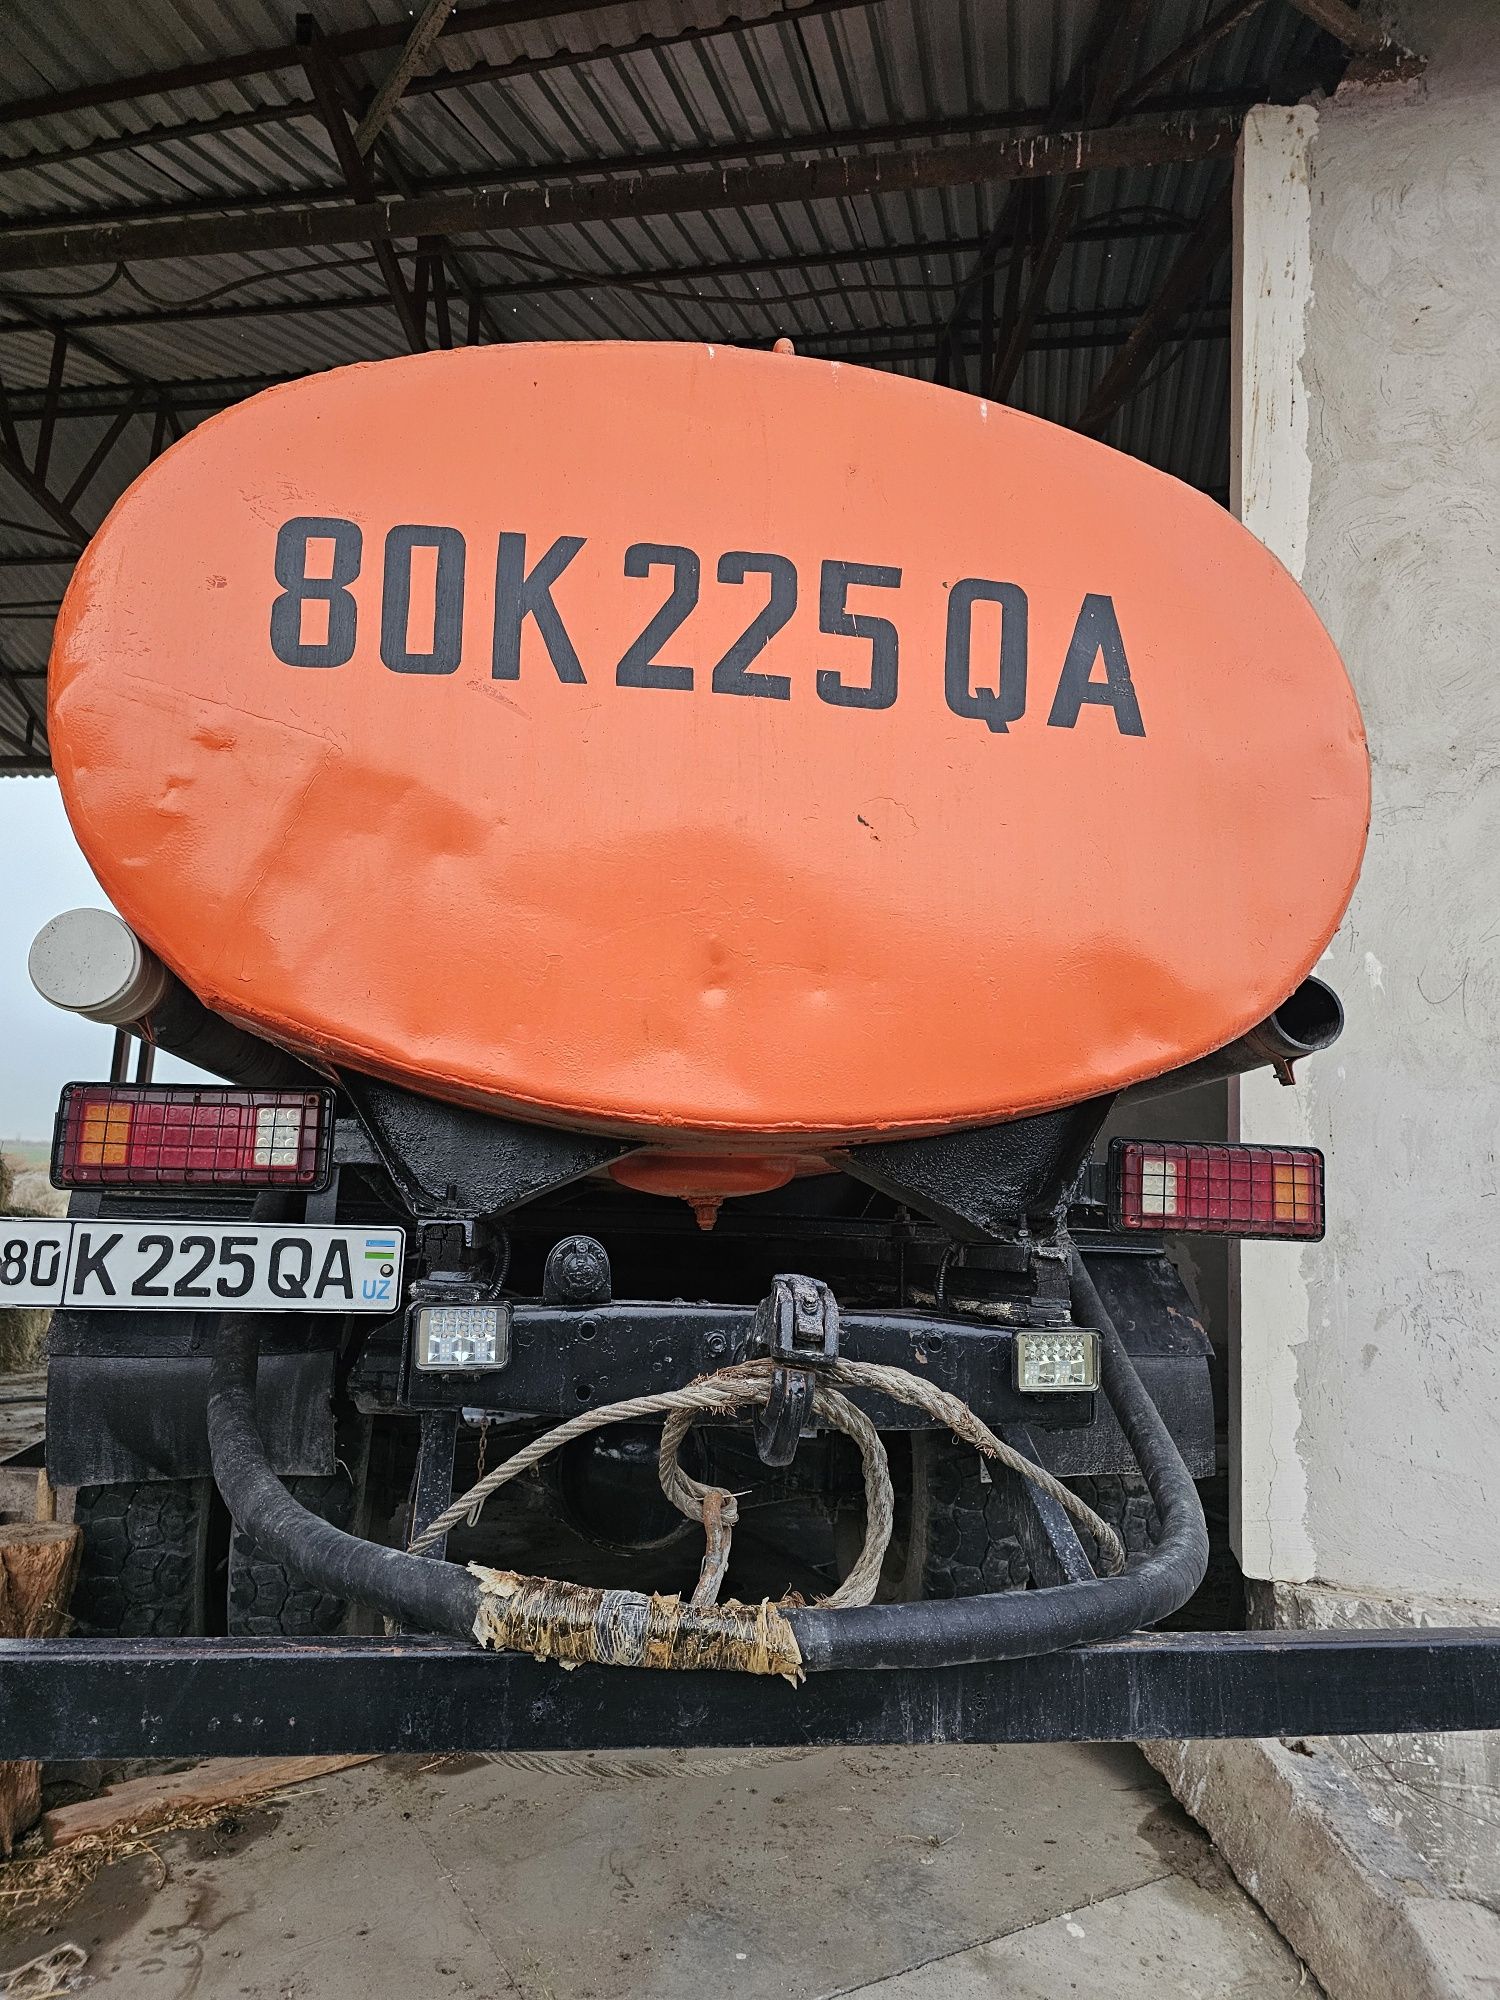 ГАЗ 53 ишалаб юрибти 5760 литр олади хитой насос урнатилган